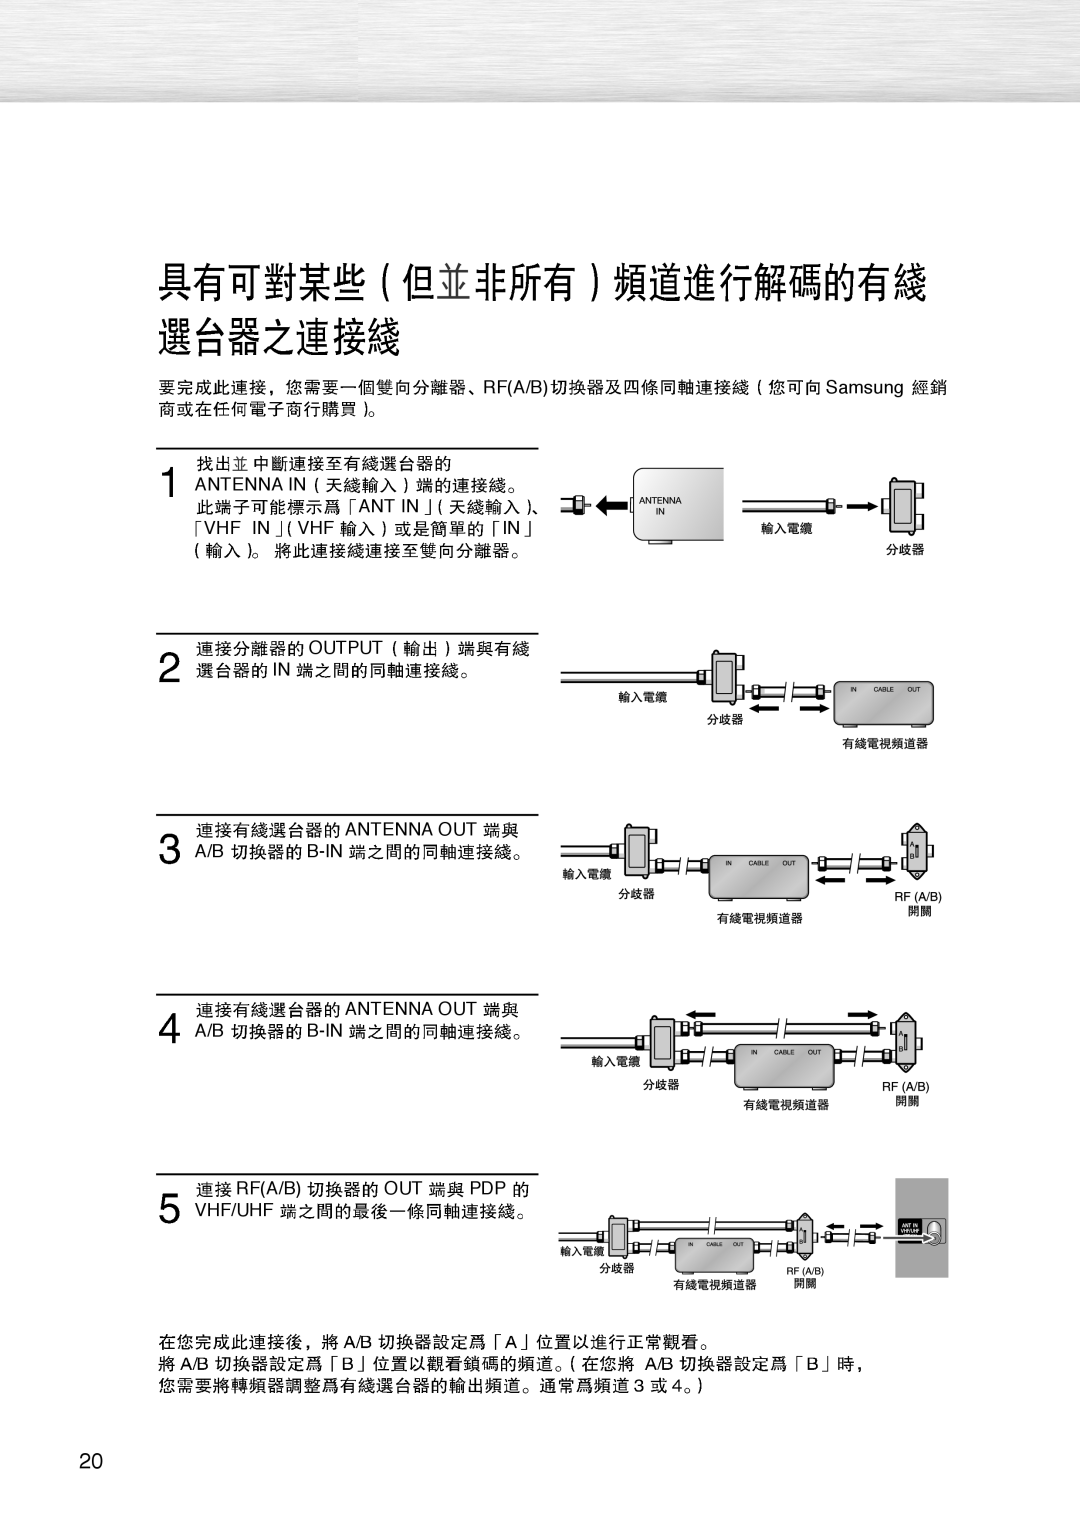 Samsung PL-42D4S manual RFA/B Samsung ANTENNA IN ANT IN VHF IN VHF IN OUTPUT IN ANTENNA OUT 